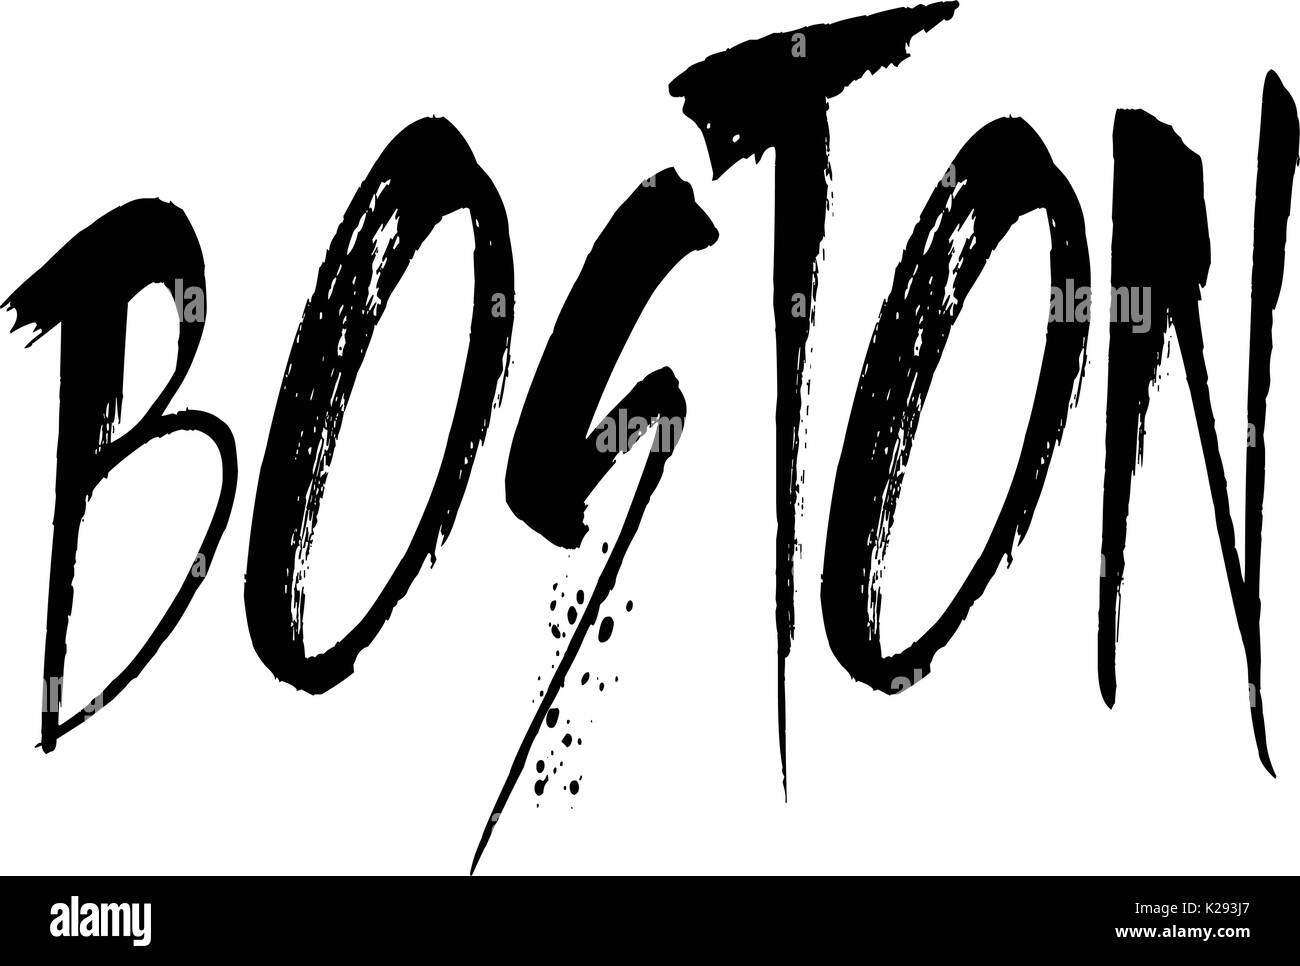 Boston text sign illuatration on white background Stock Vector